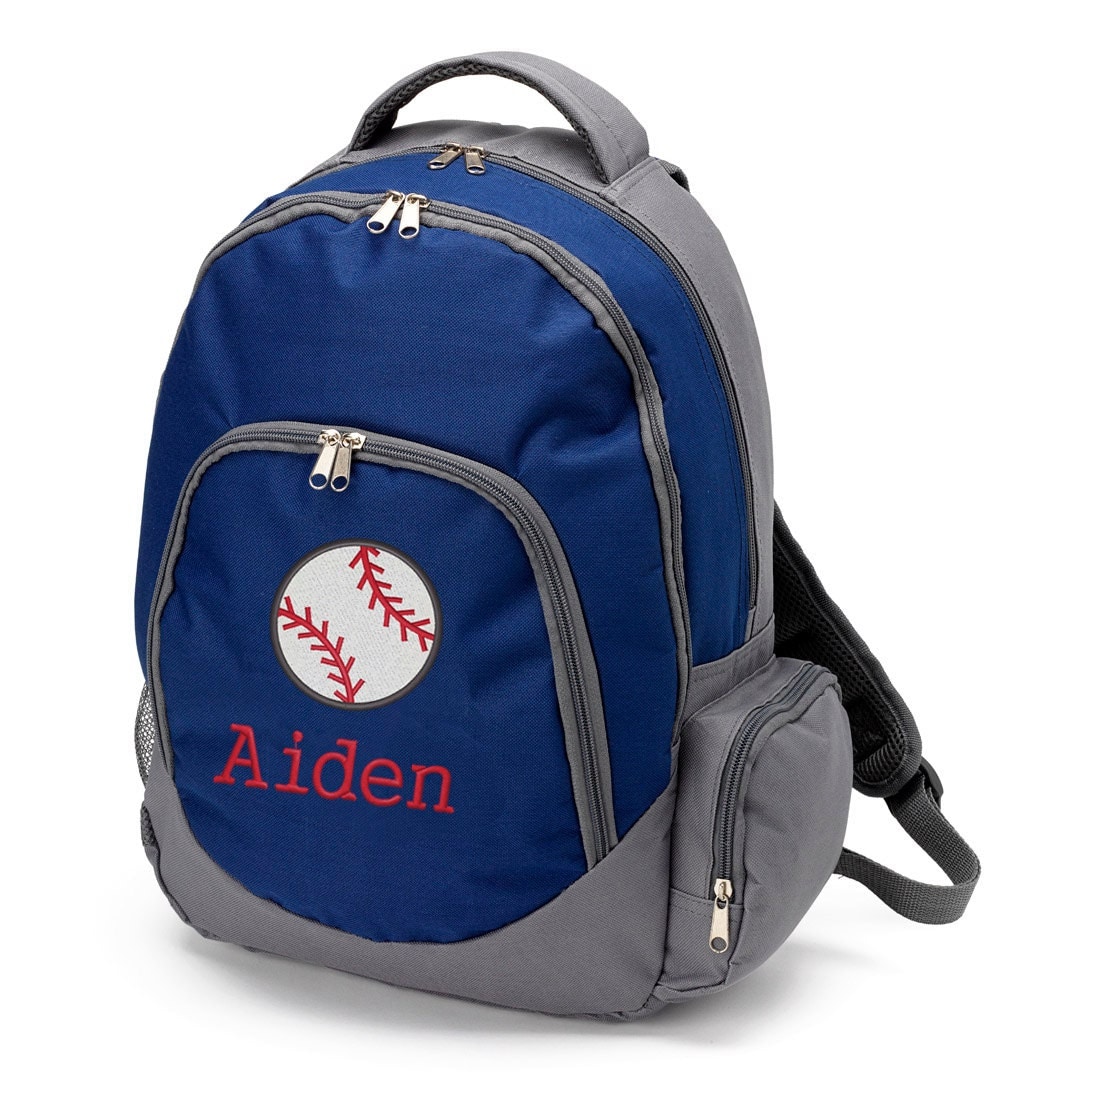 Personalized backpack for boys baseball backpack Monogram